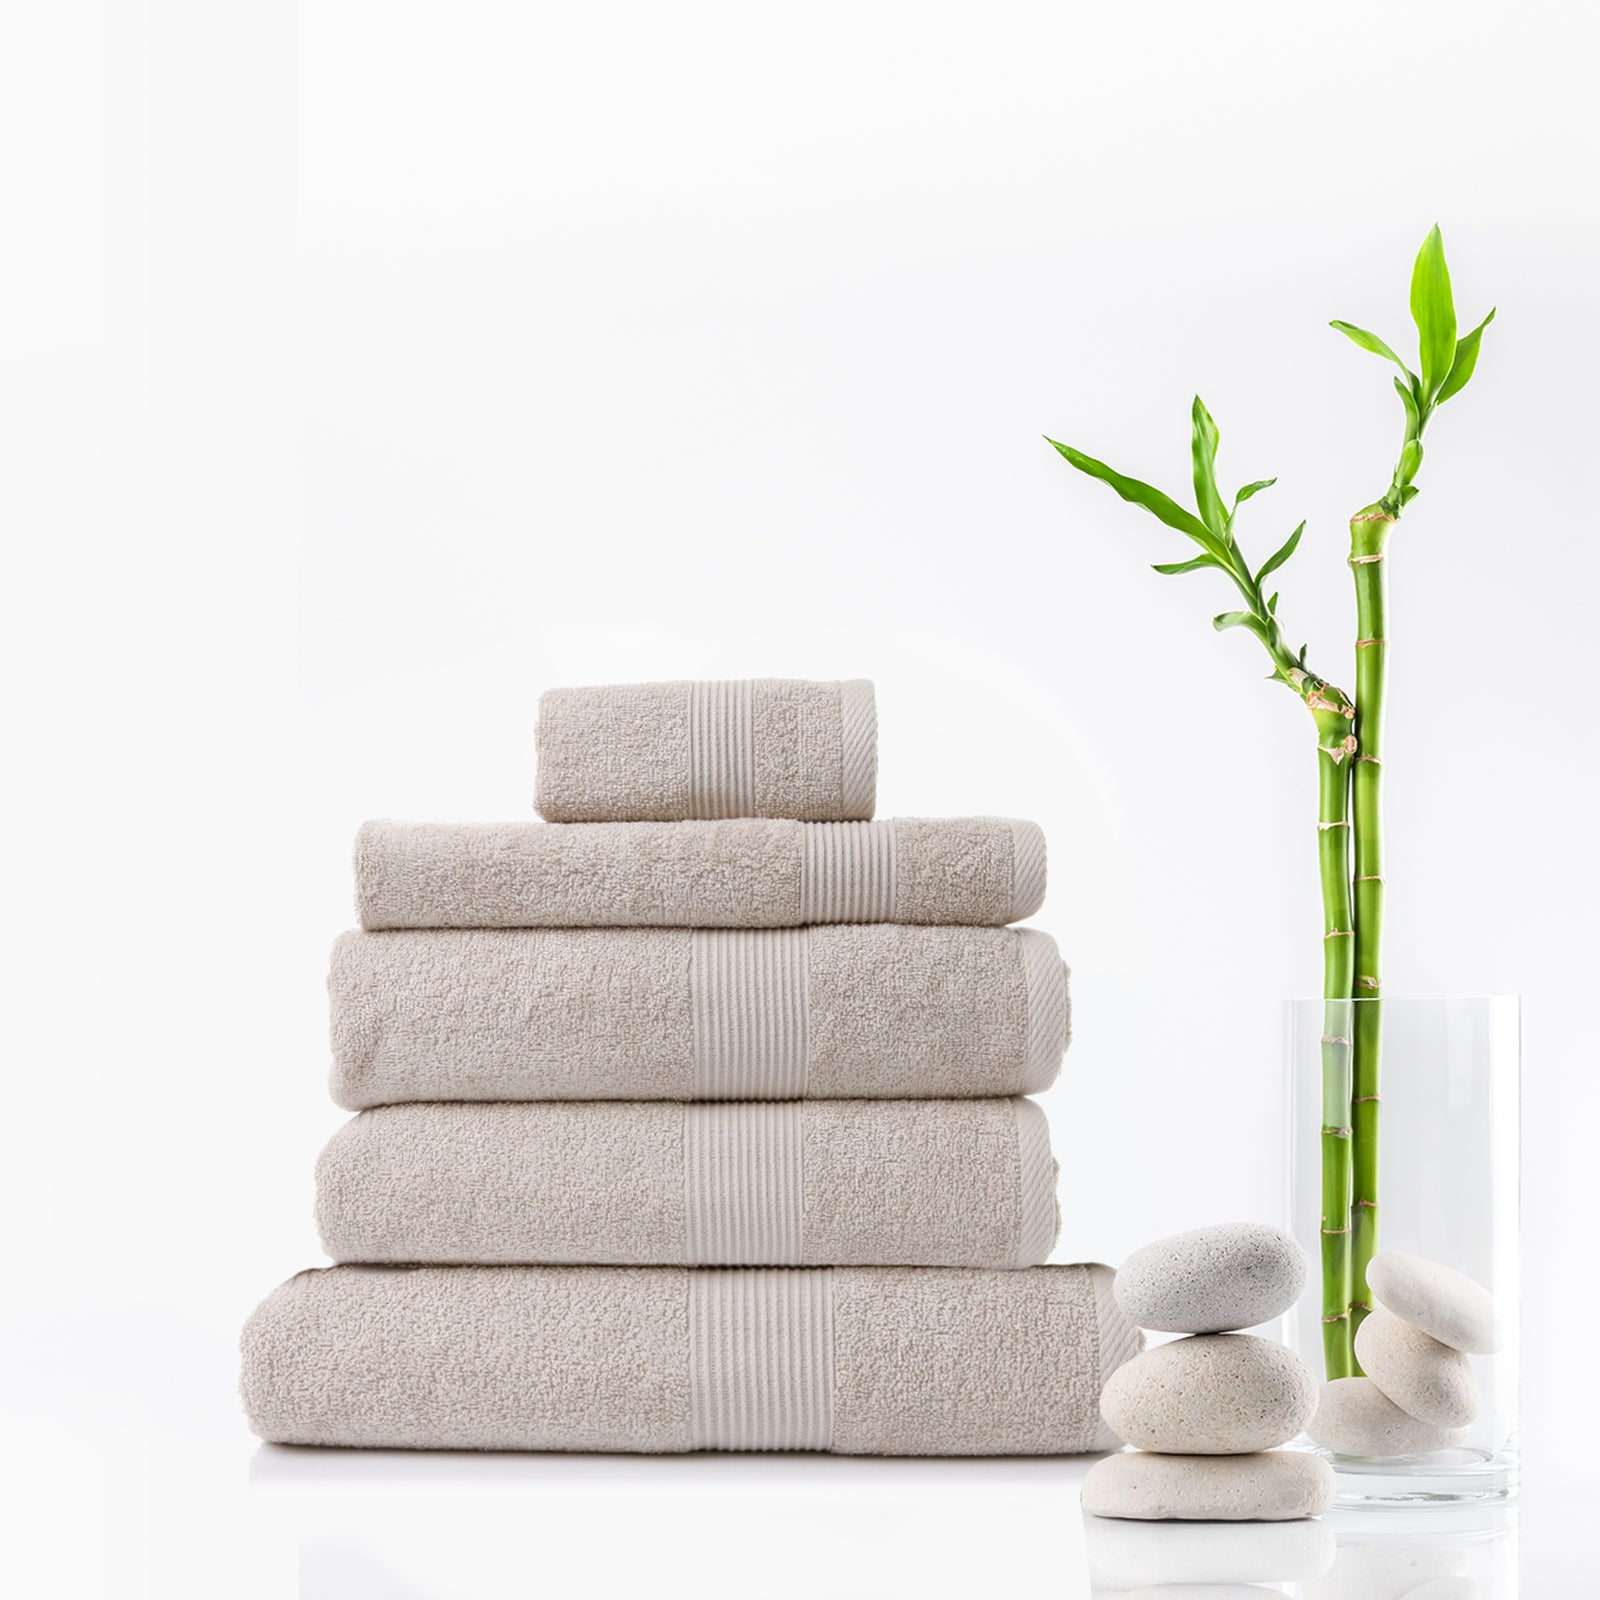 Royal Comfort Cotton Bamboo Towel 5pc Set - Beige